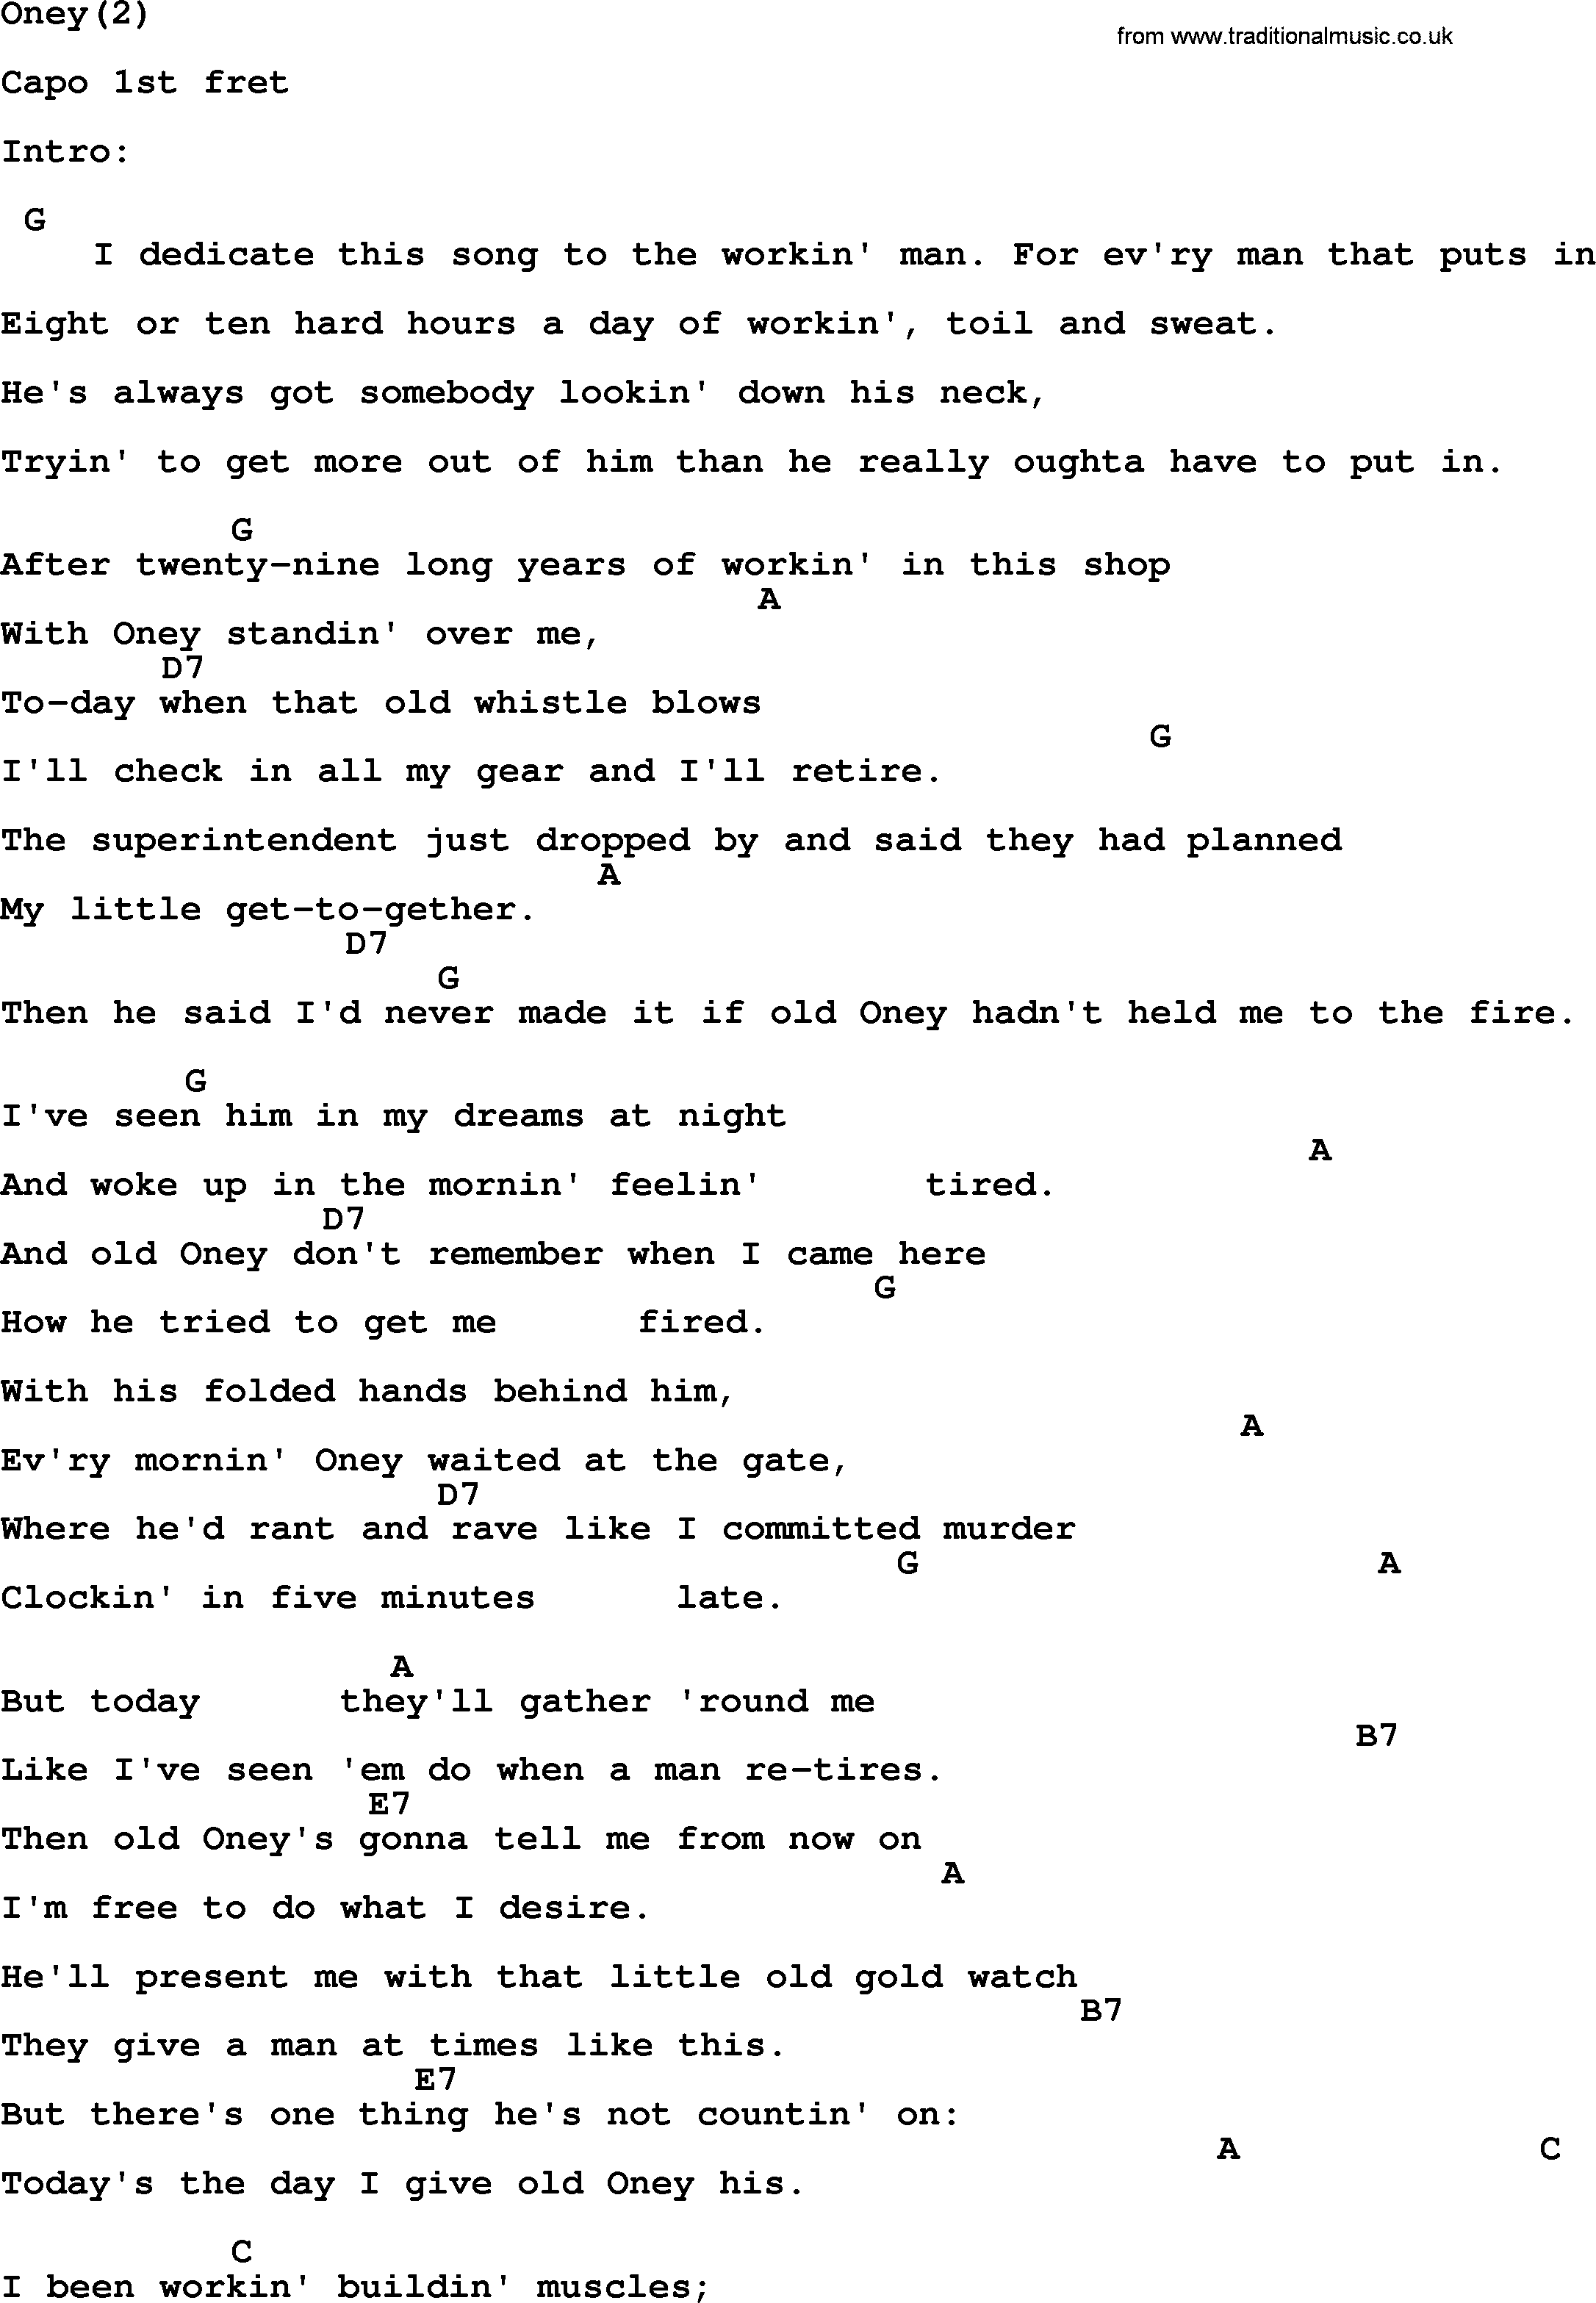 Johnny Cash song Oney(2), lyrics and chords